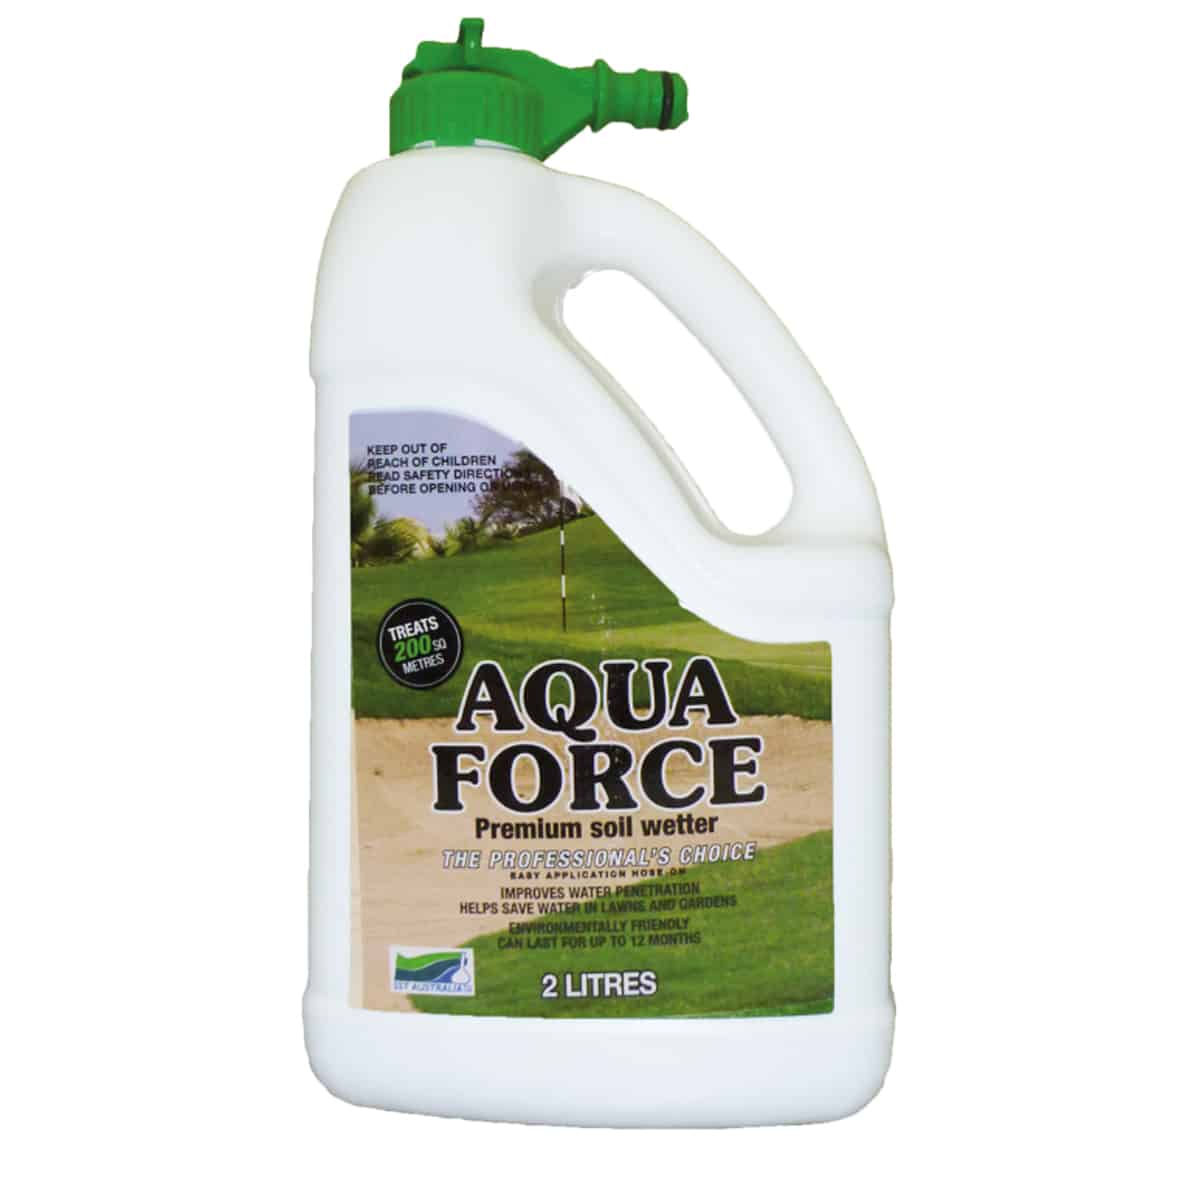 Aqua Force Premium Soil Wetter 2L - WA Metro Area Only